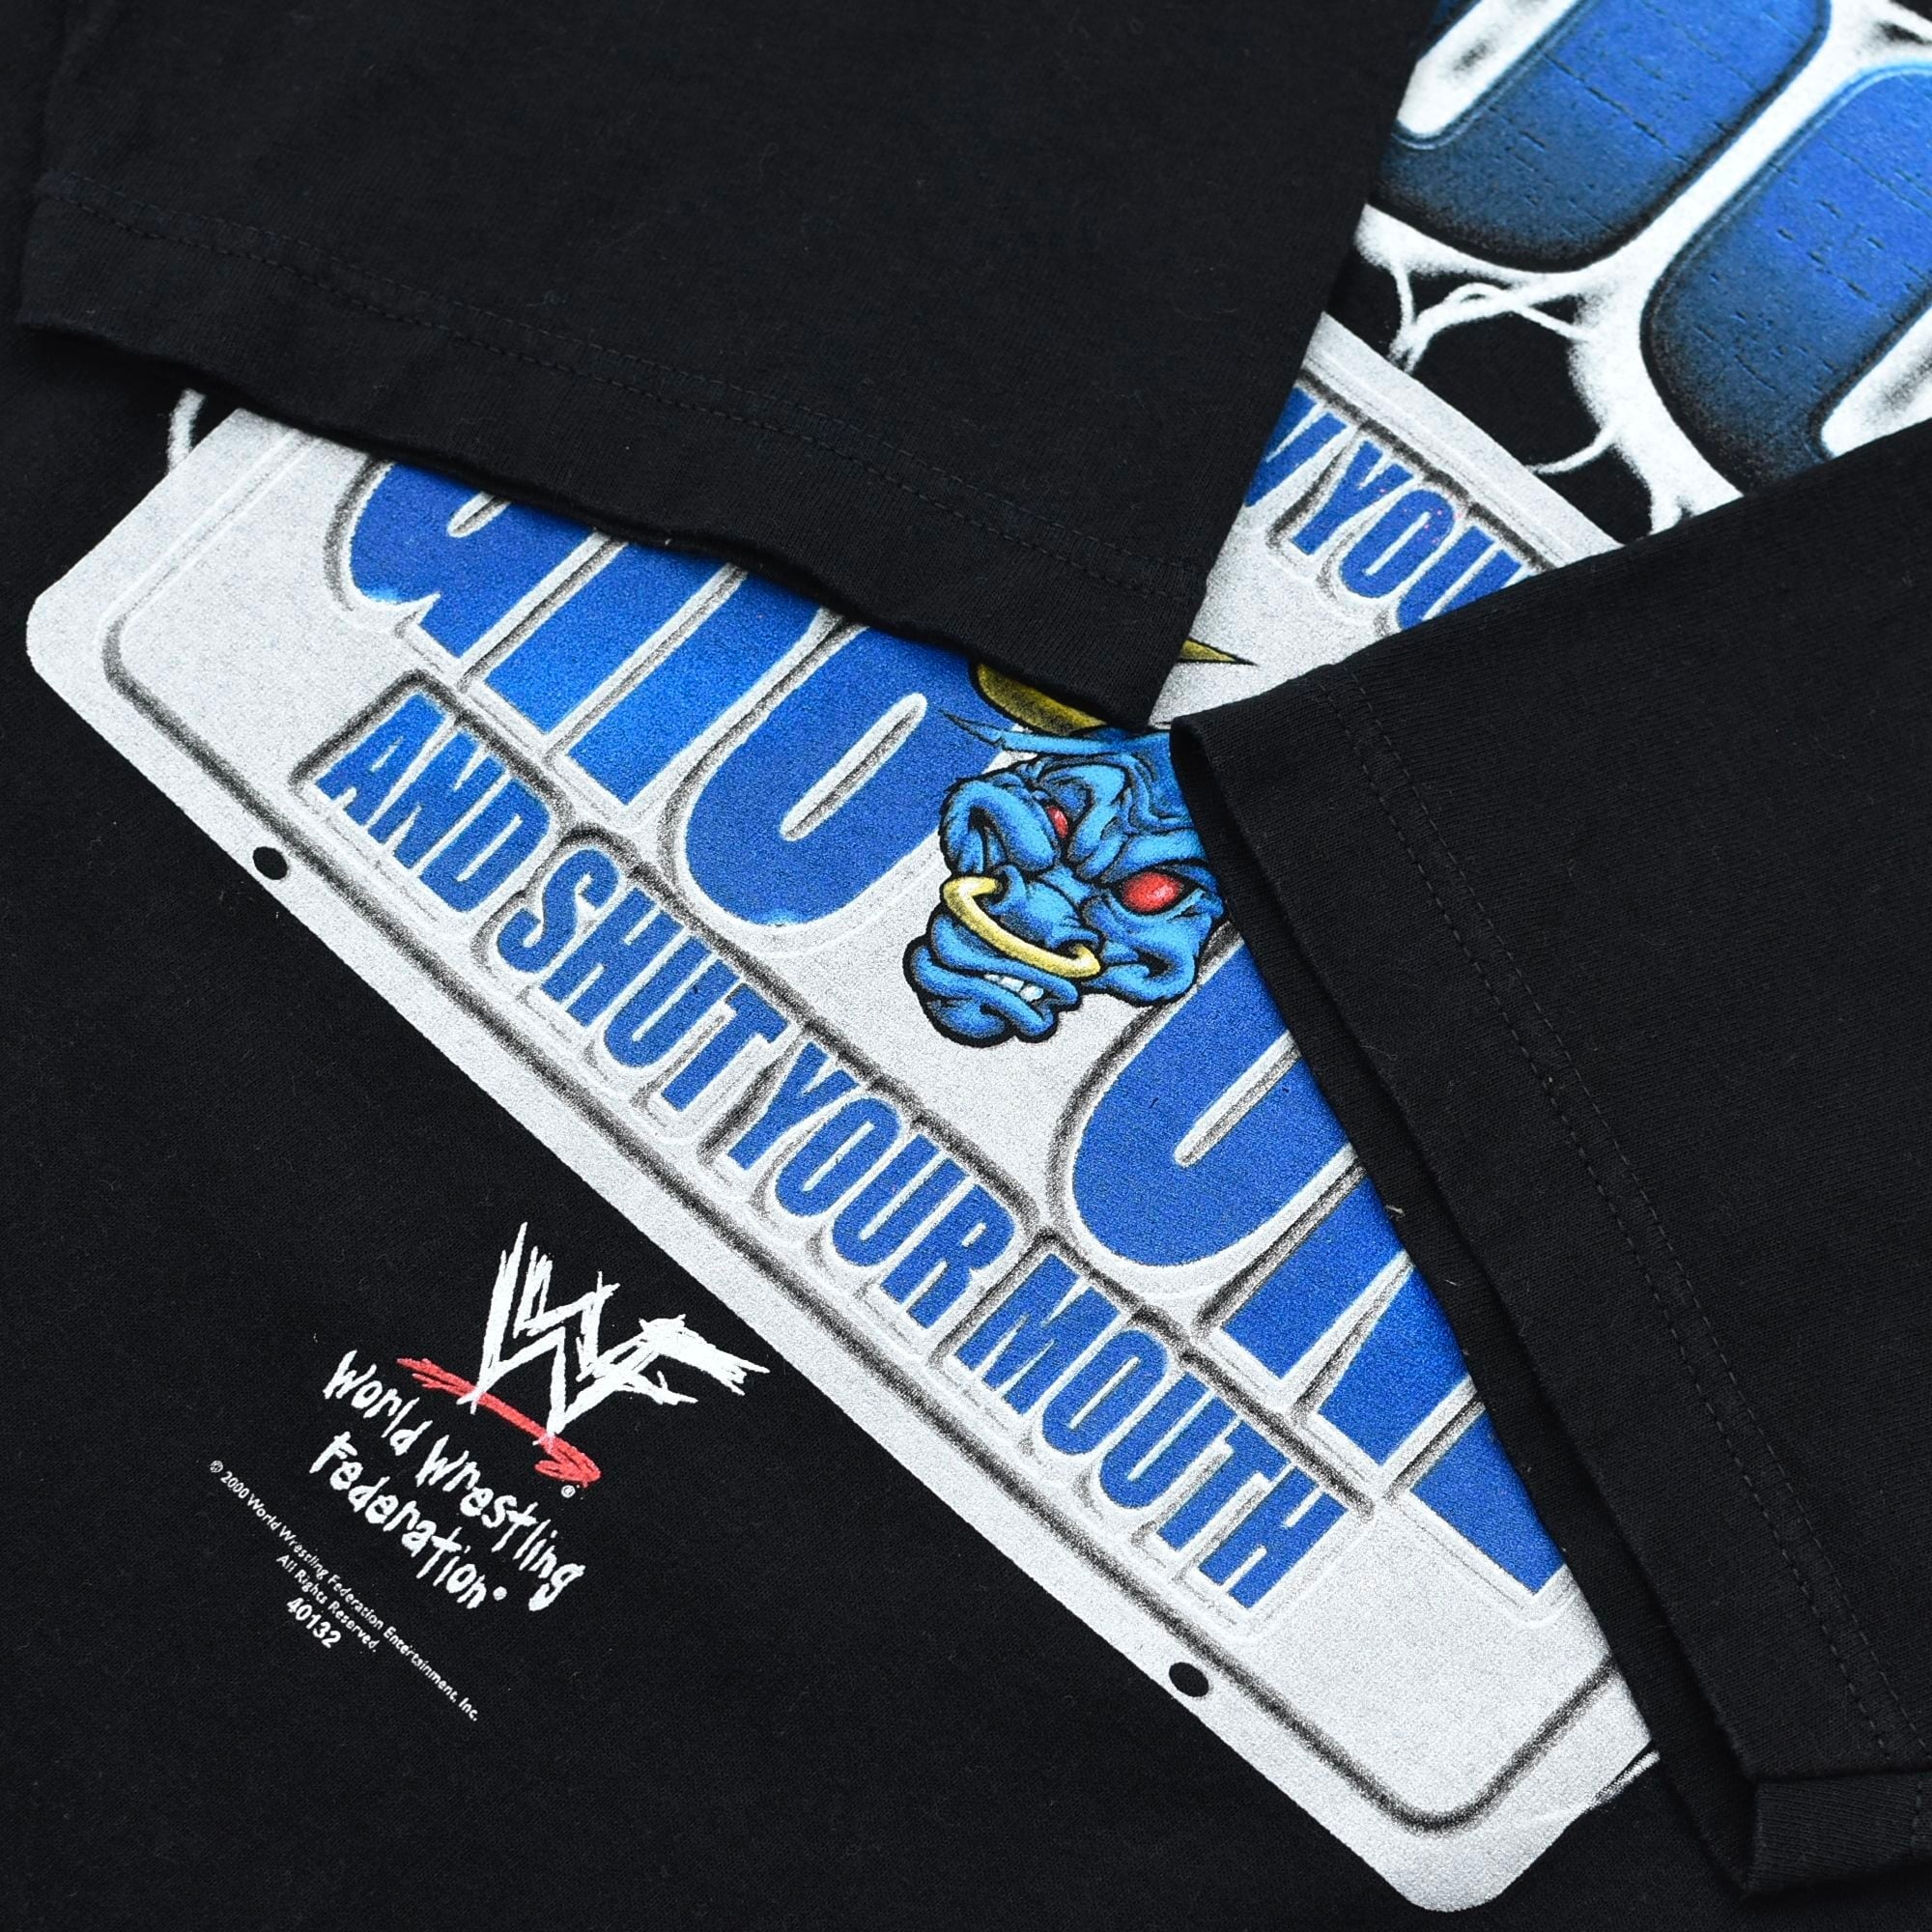 WWE World Wrestling Entertainment 総柄Tシャツ